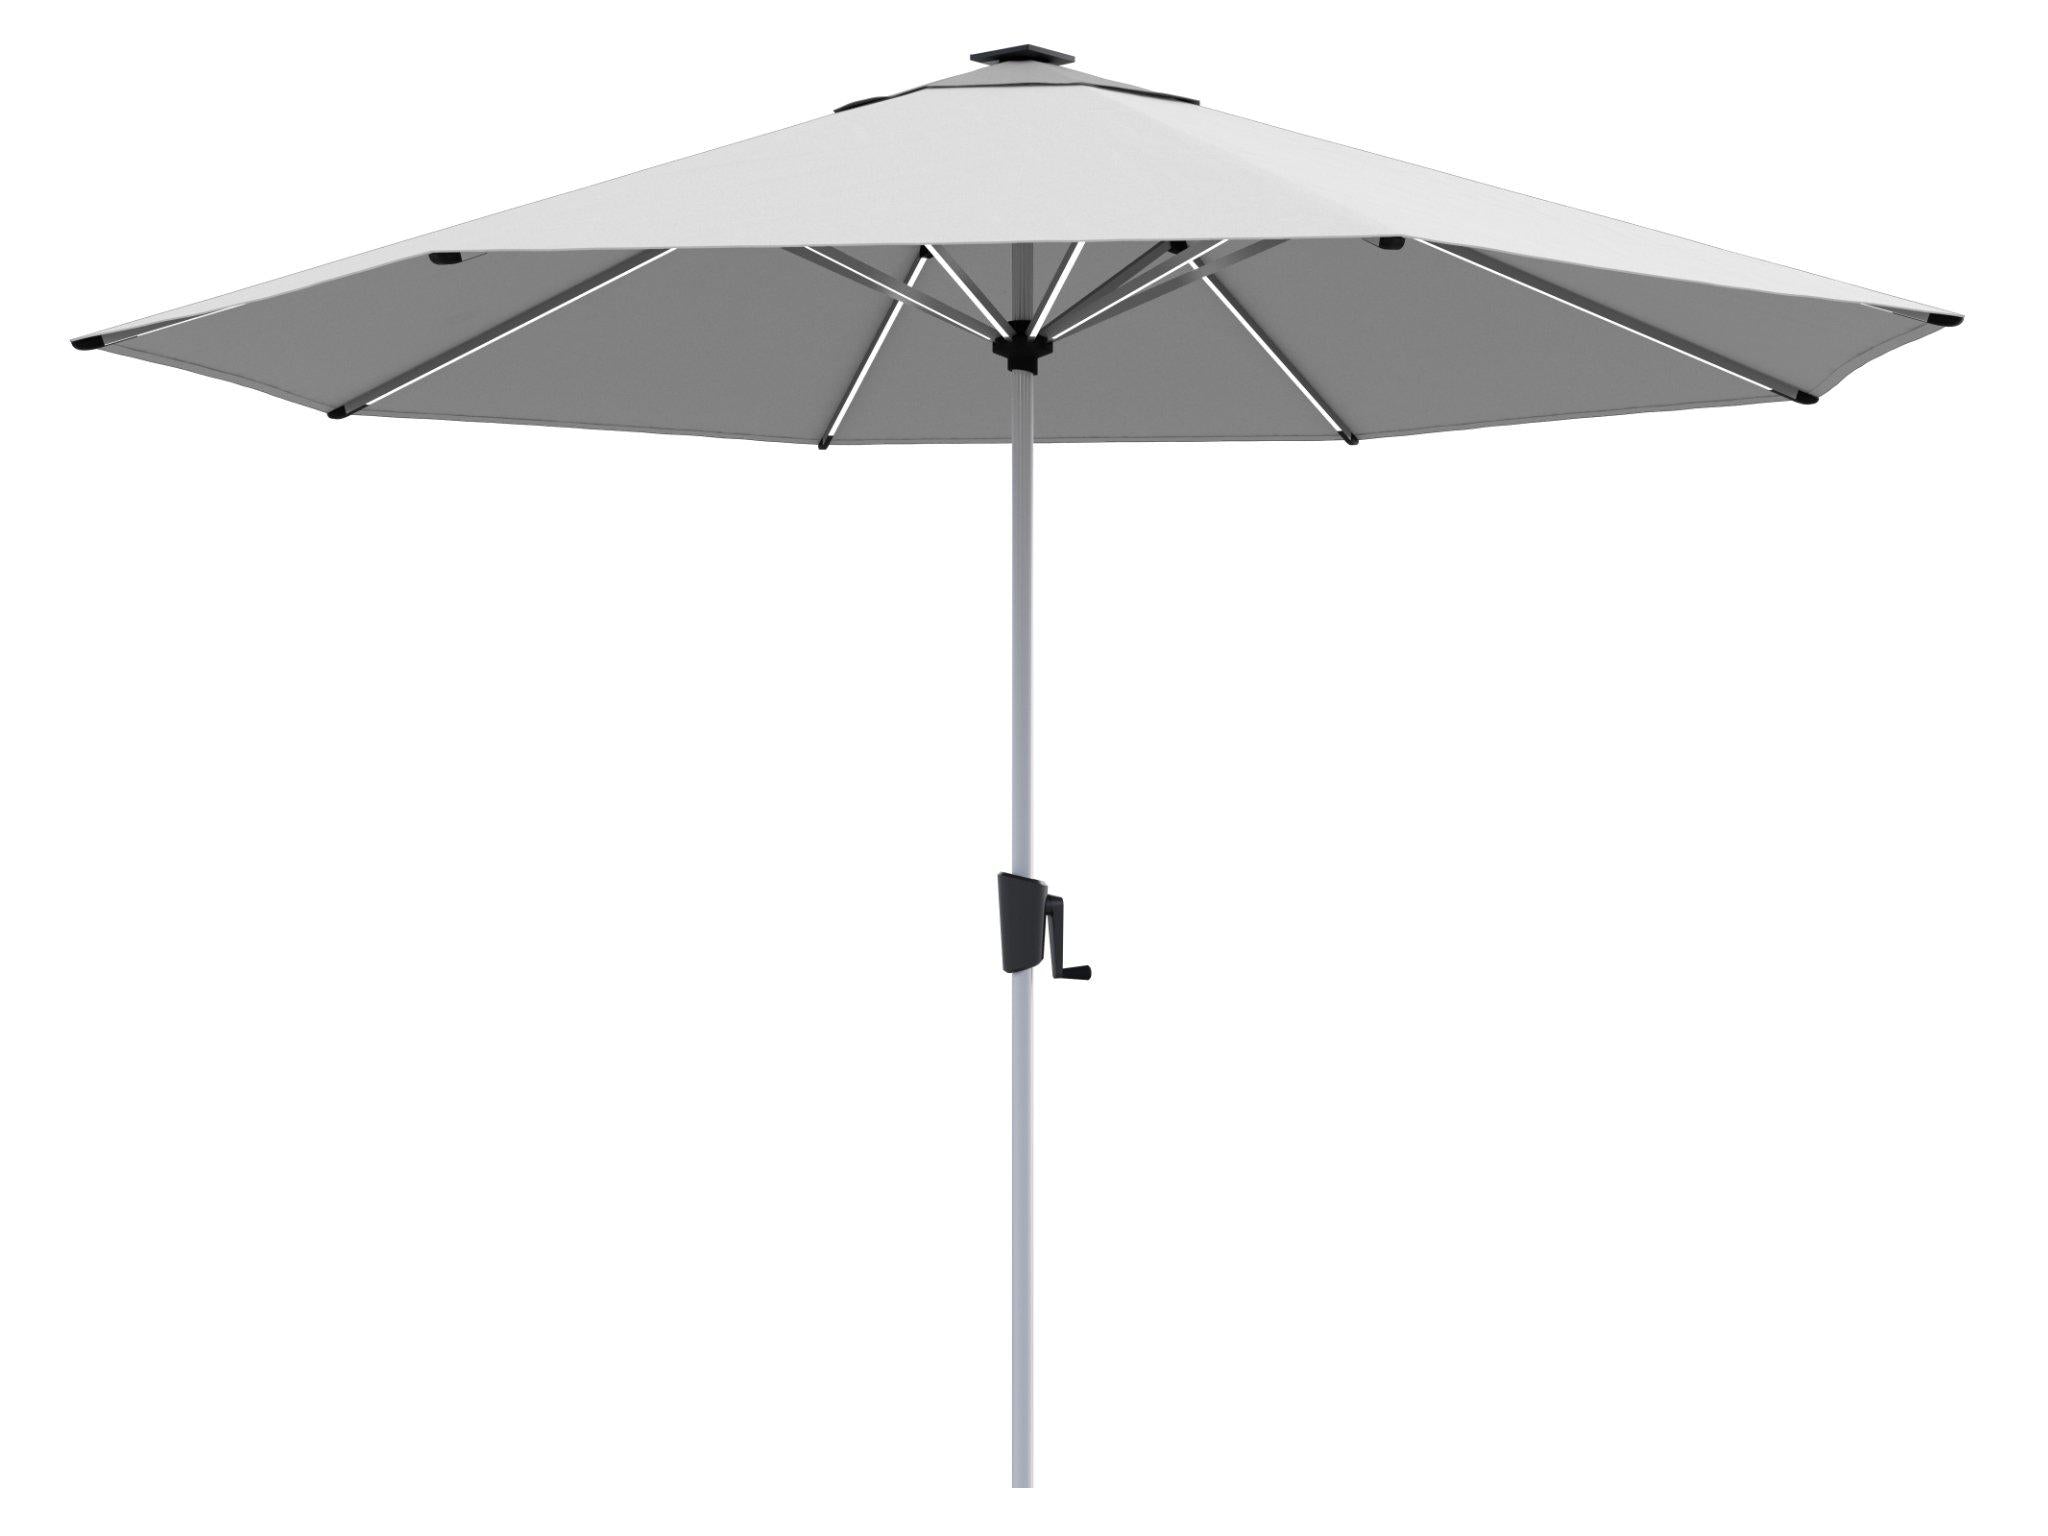 Coolaroo Bondi 3m Round LED Market Umbrella — Steel